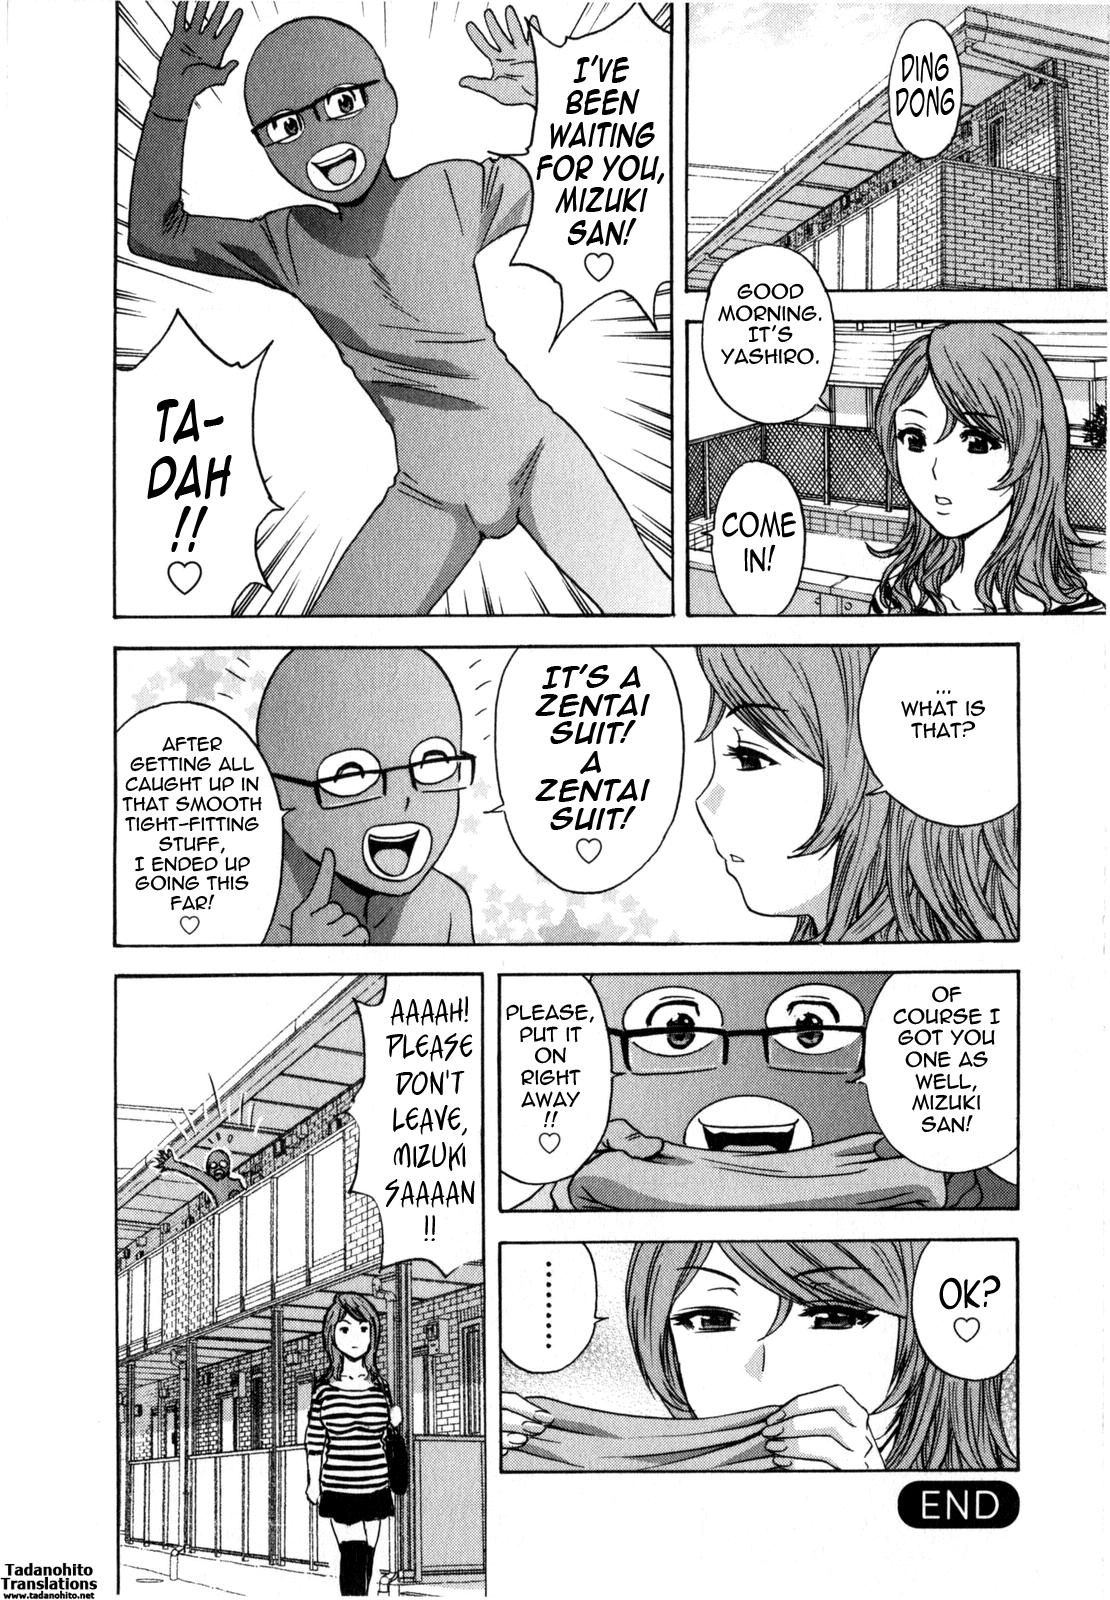 [Hidemaru] Life with Married Women Just Like a Manga 2 - Ch. 1-8 [English] {Tadanohito} 103